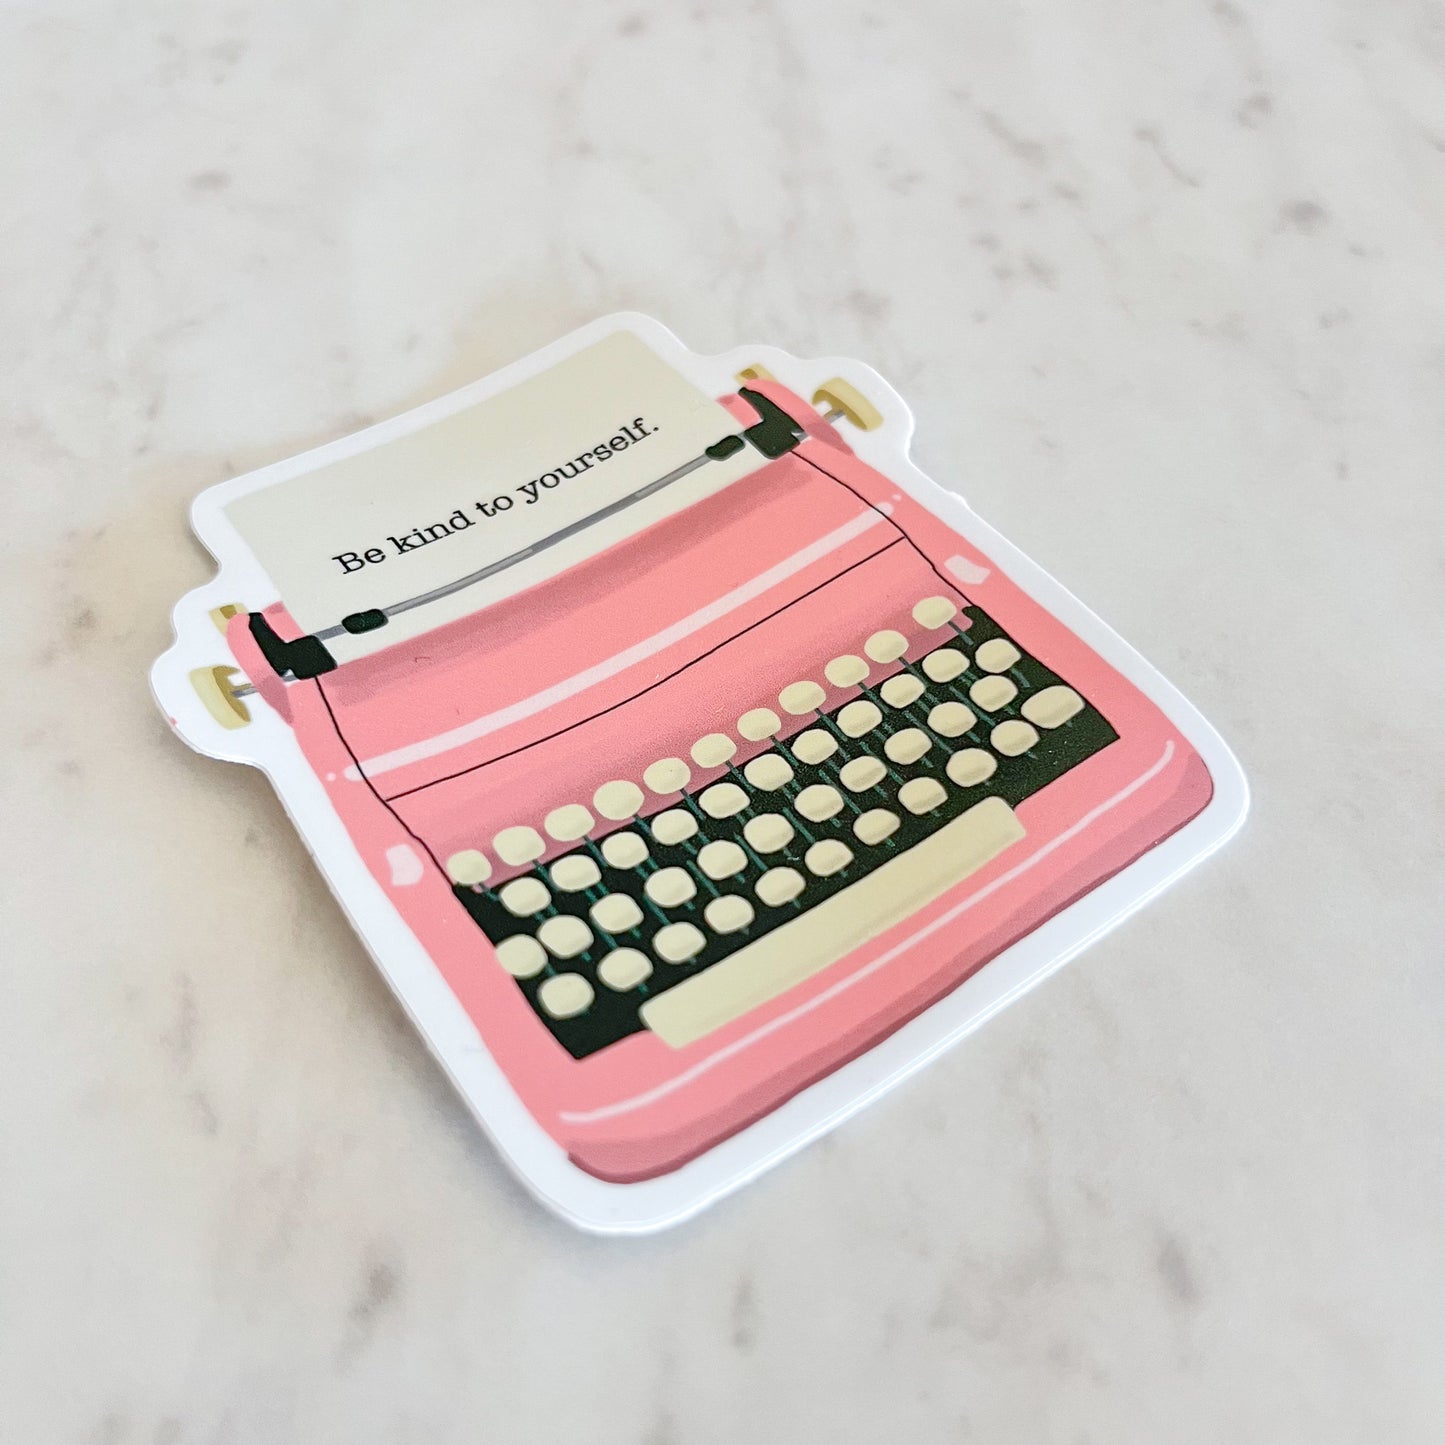 Typewriter Waterproof Sticker "Be Kind to Yourself"